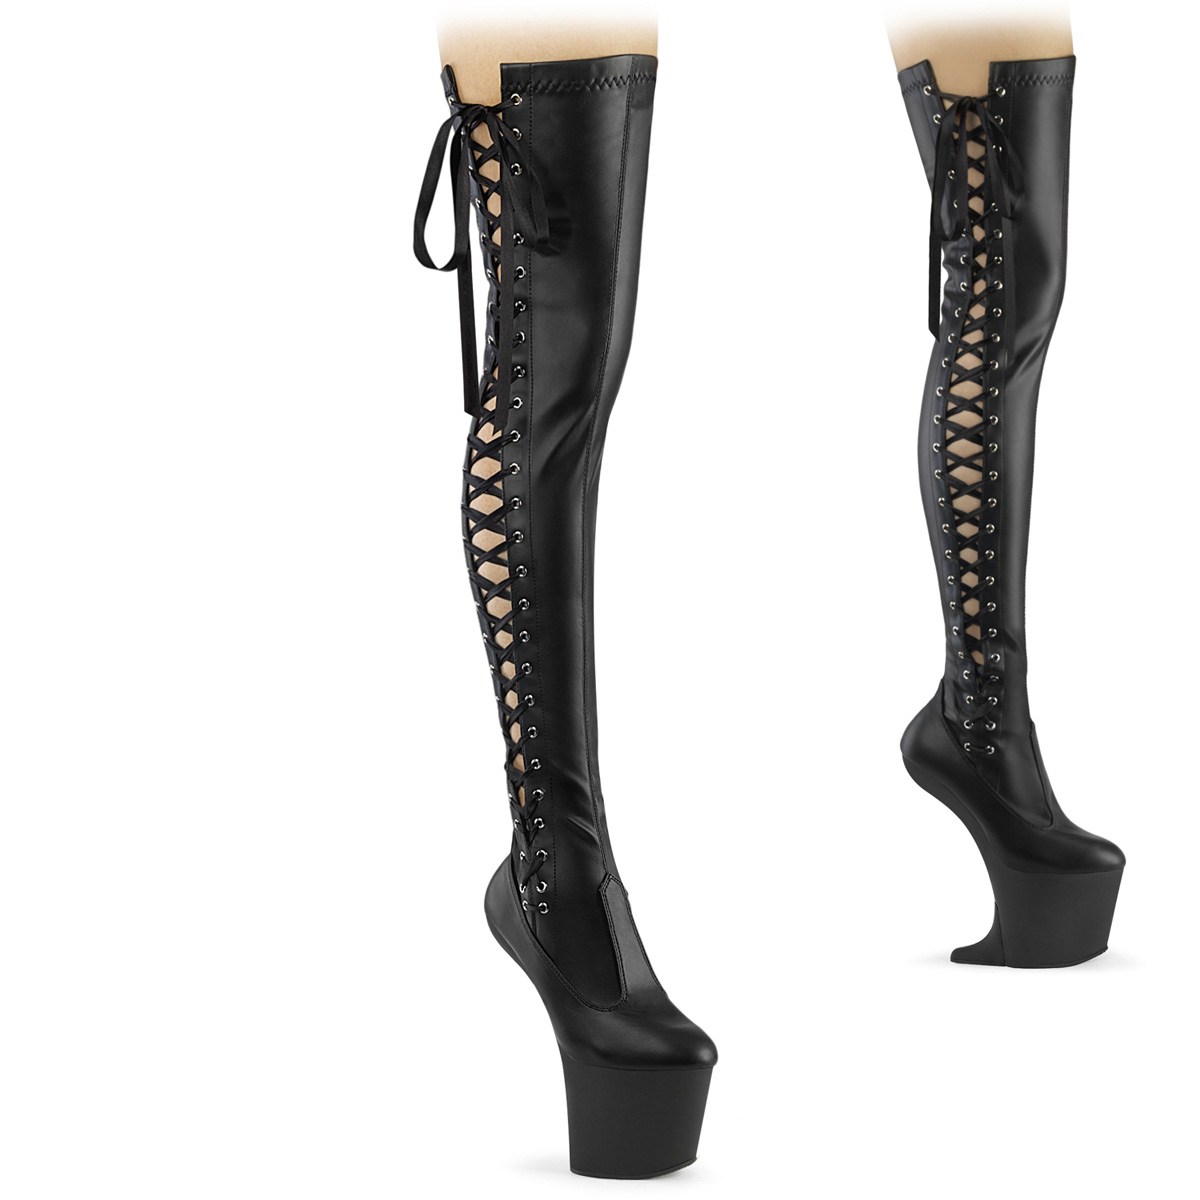 Women's Super High Heel Heelless Platform Shoes Less Wedge Nightclub Ankle  Boots | eBay